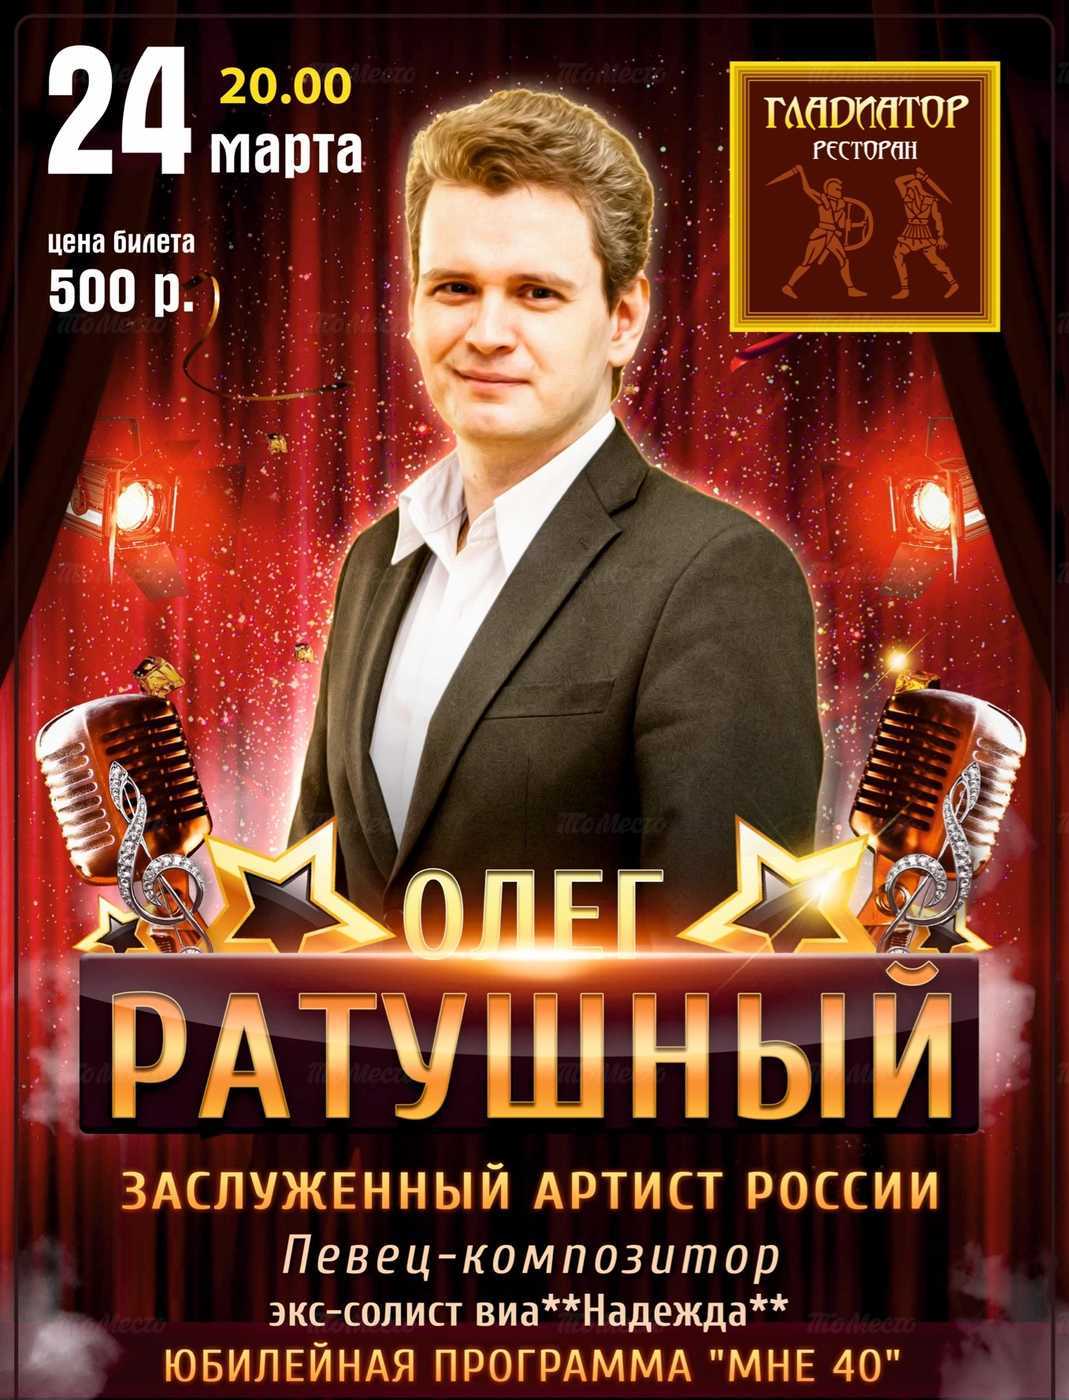 Концерт Олега Ратушного "Мне 40"